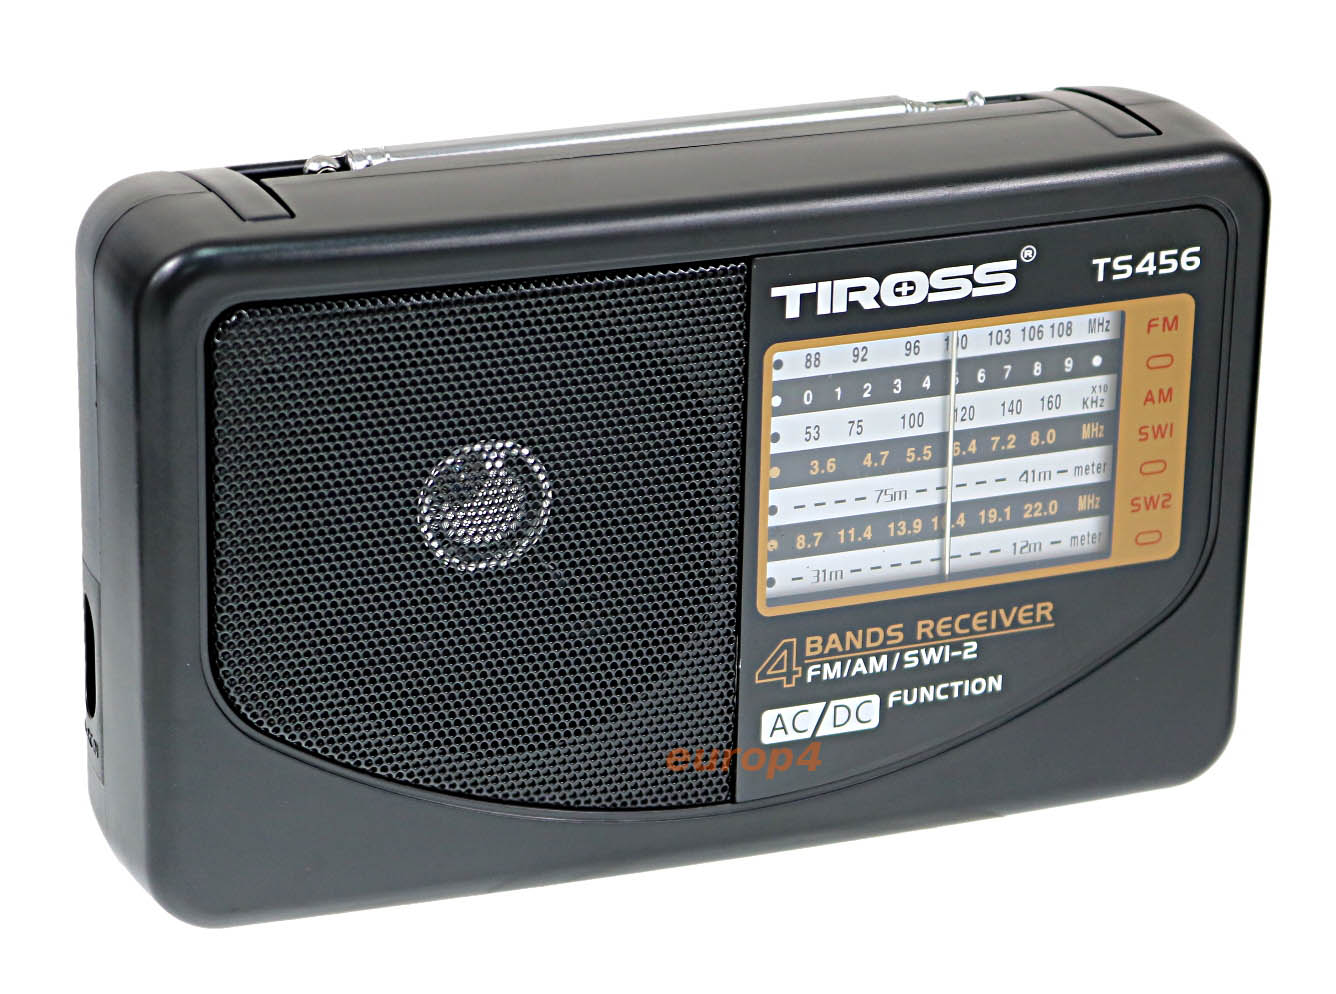 Radio Tiross TS 456 przenośne mini na baterie+zasilanie 230V